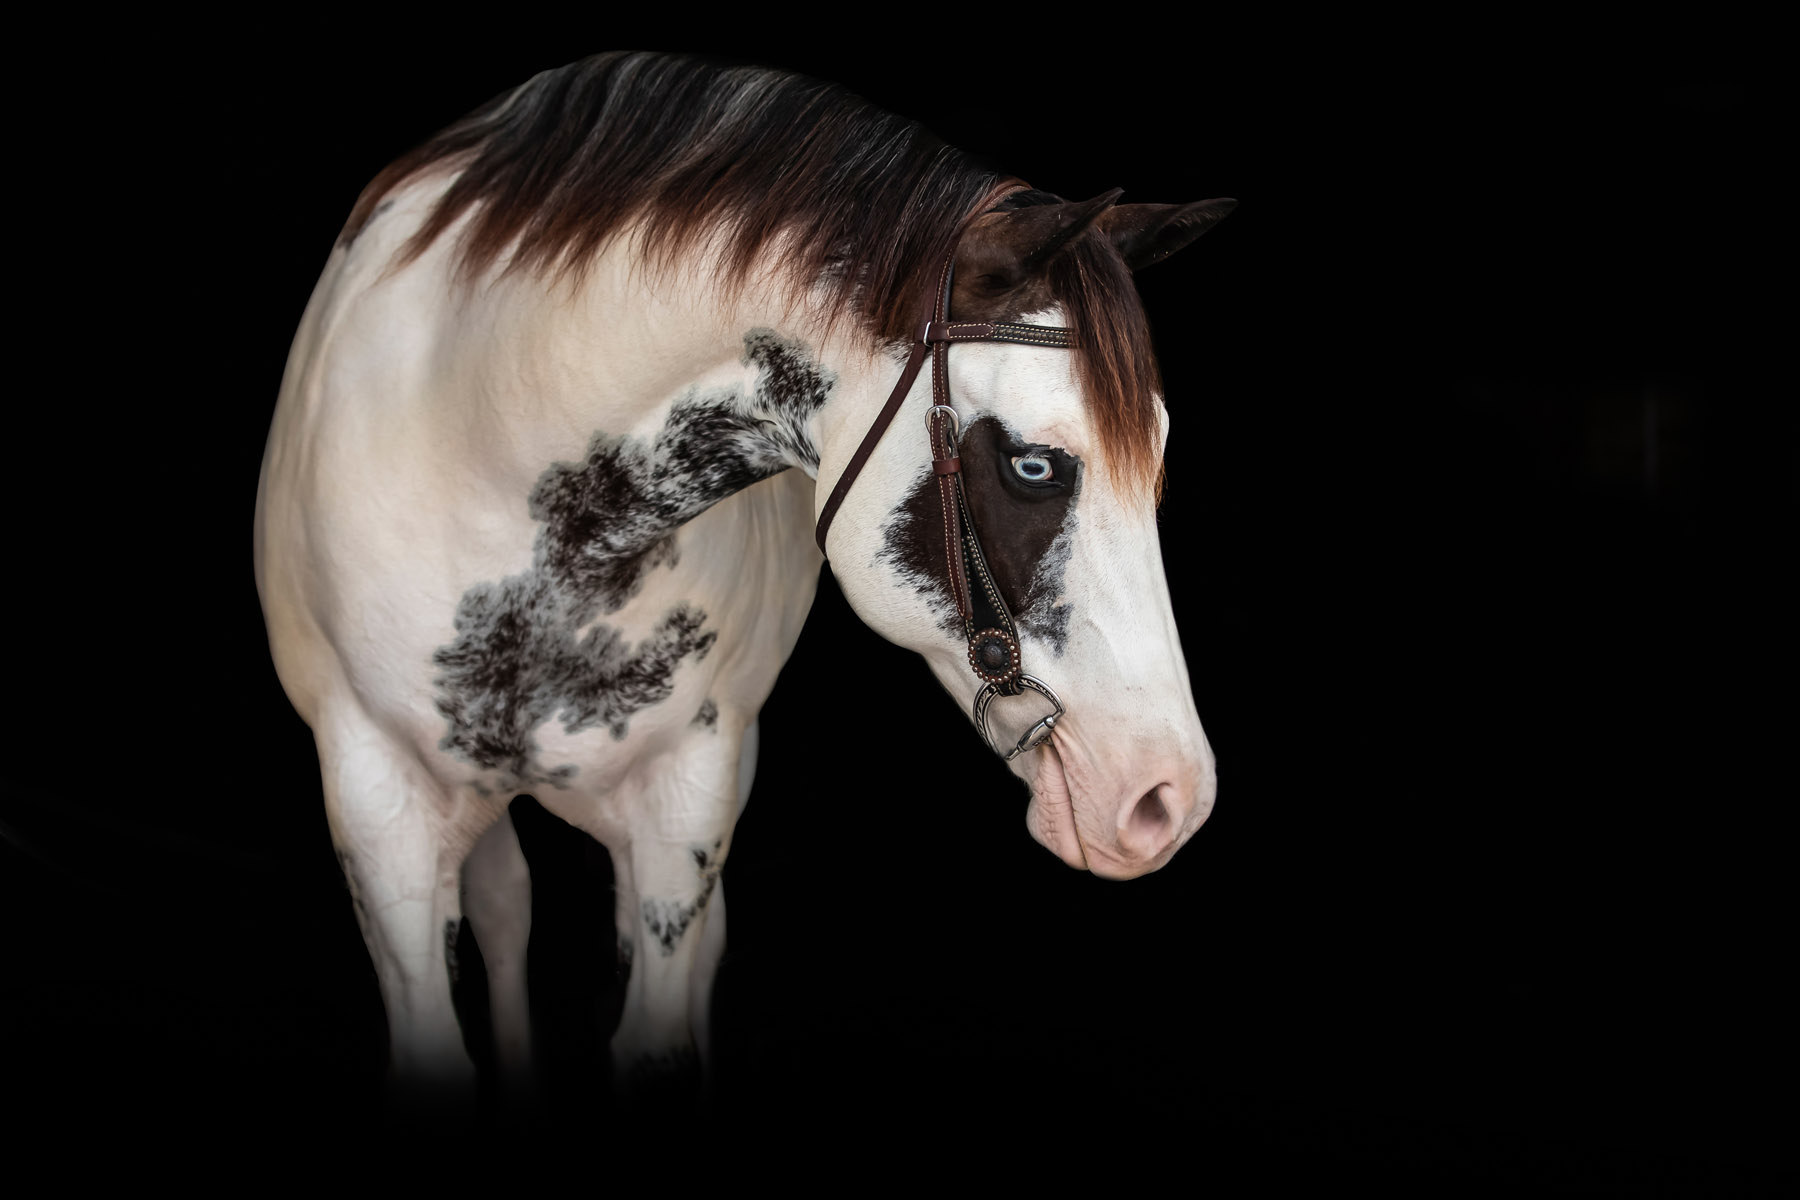 equine-photography-florida-black-background-jill-brammer-5